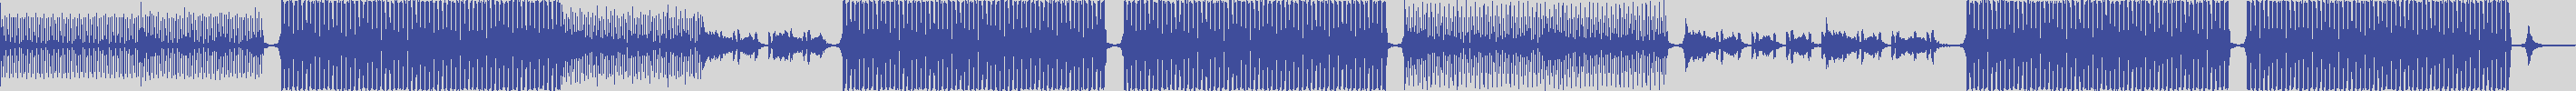 nf_boyz_records [NFY075] Stereo 9 - Keid Bable [U.k. House Mix] audio wave form